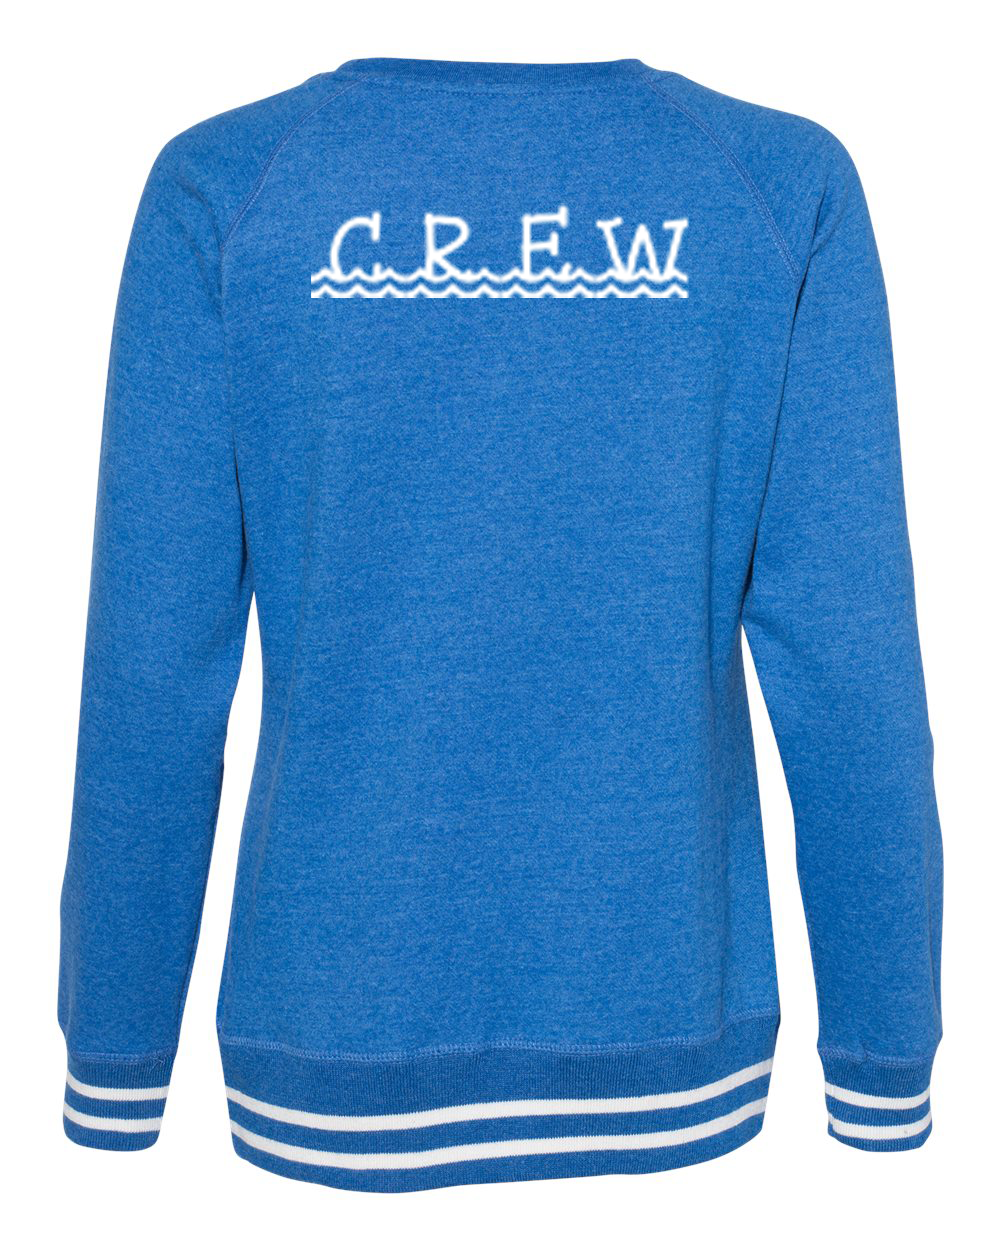 custom design of J. America 8652 - Relay Women's Crewneck Sweatshirt